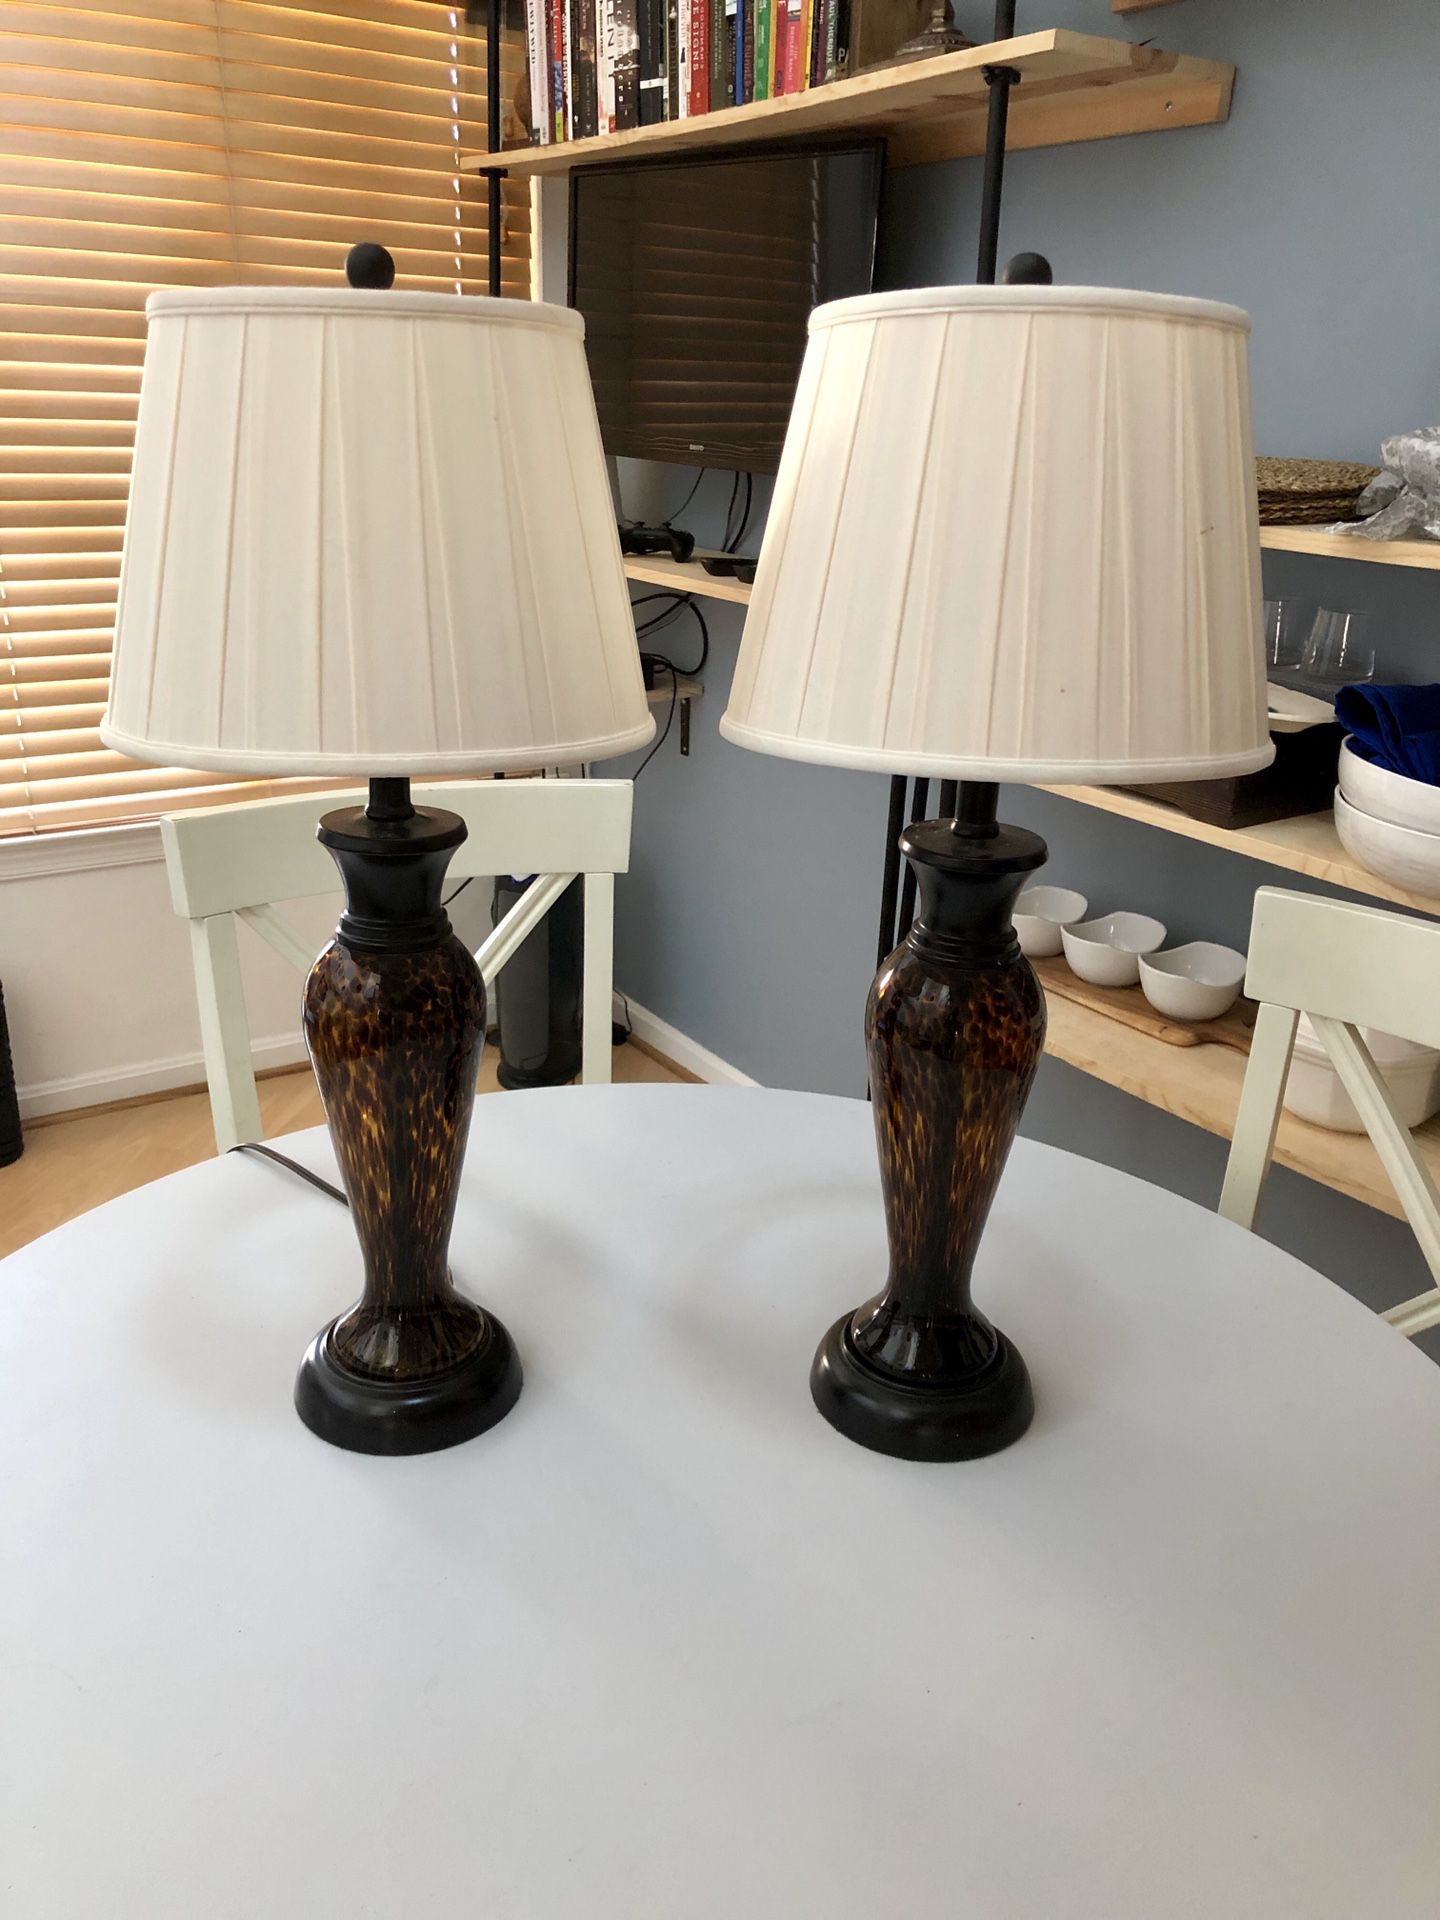 Pair of brown glass lamps